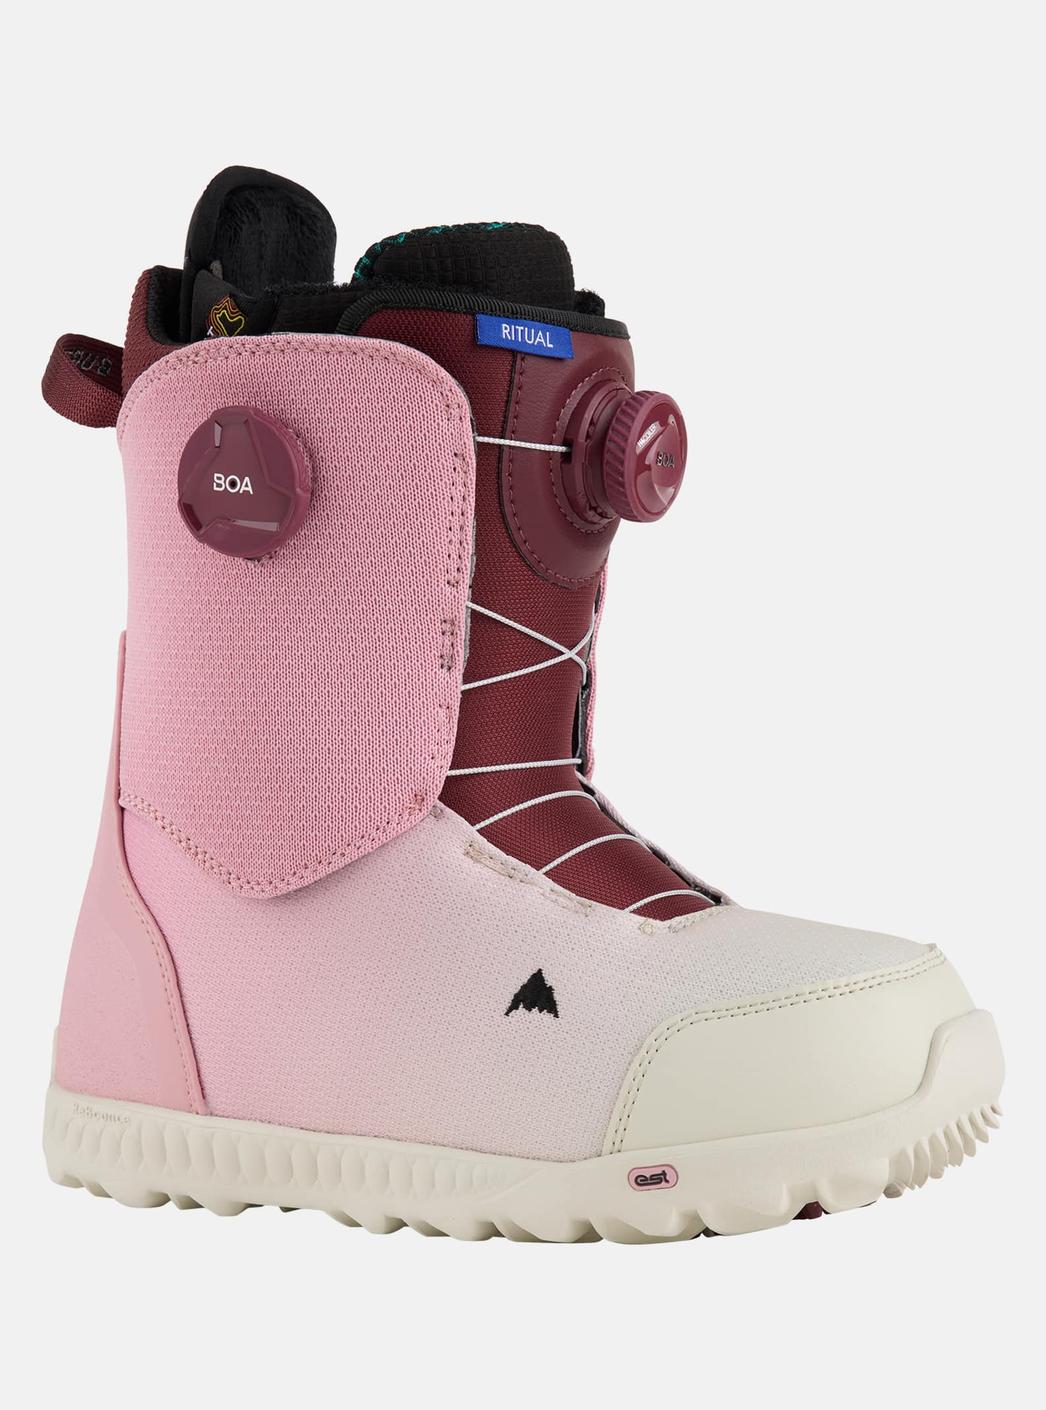 burton - boots de snowboard ritual boa® femme